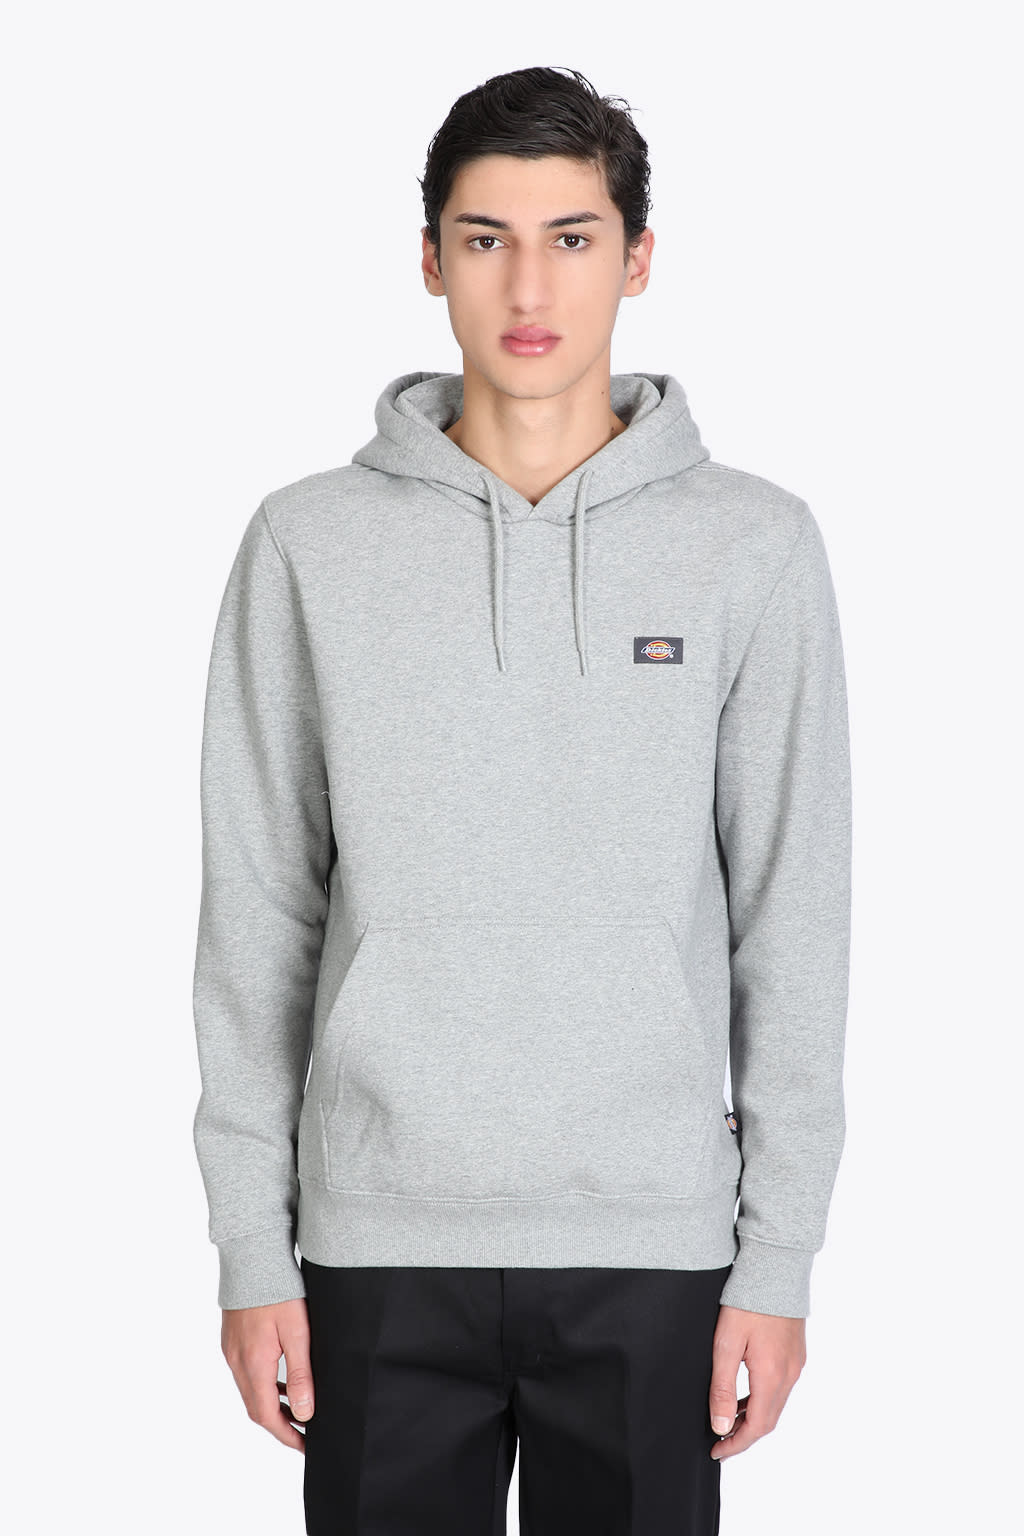 Dickies Oakport Hoodie Grey cotton hoodie with chest logo - Oakport hoodie